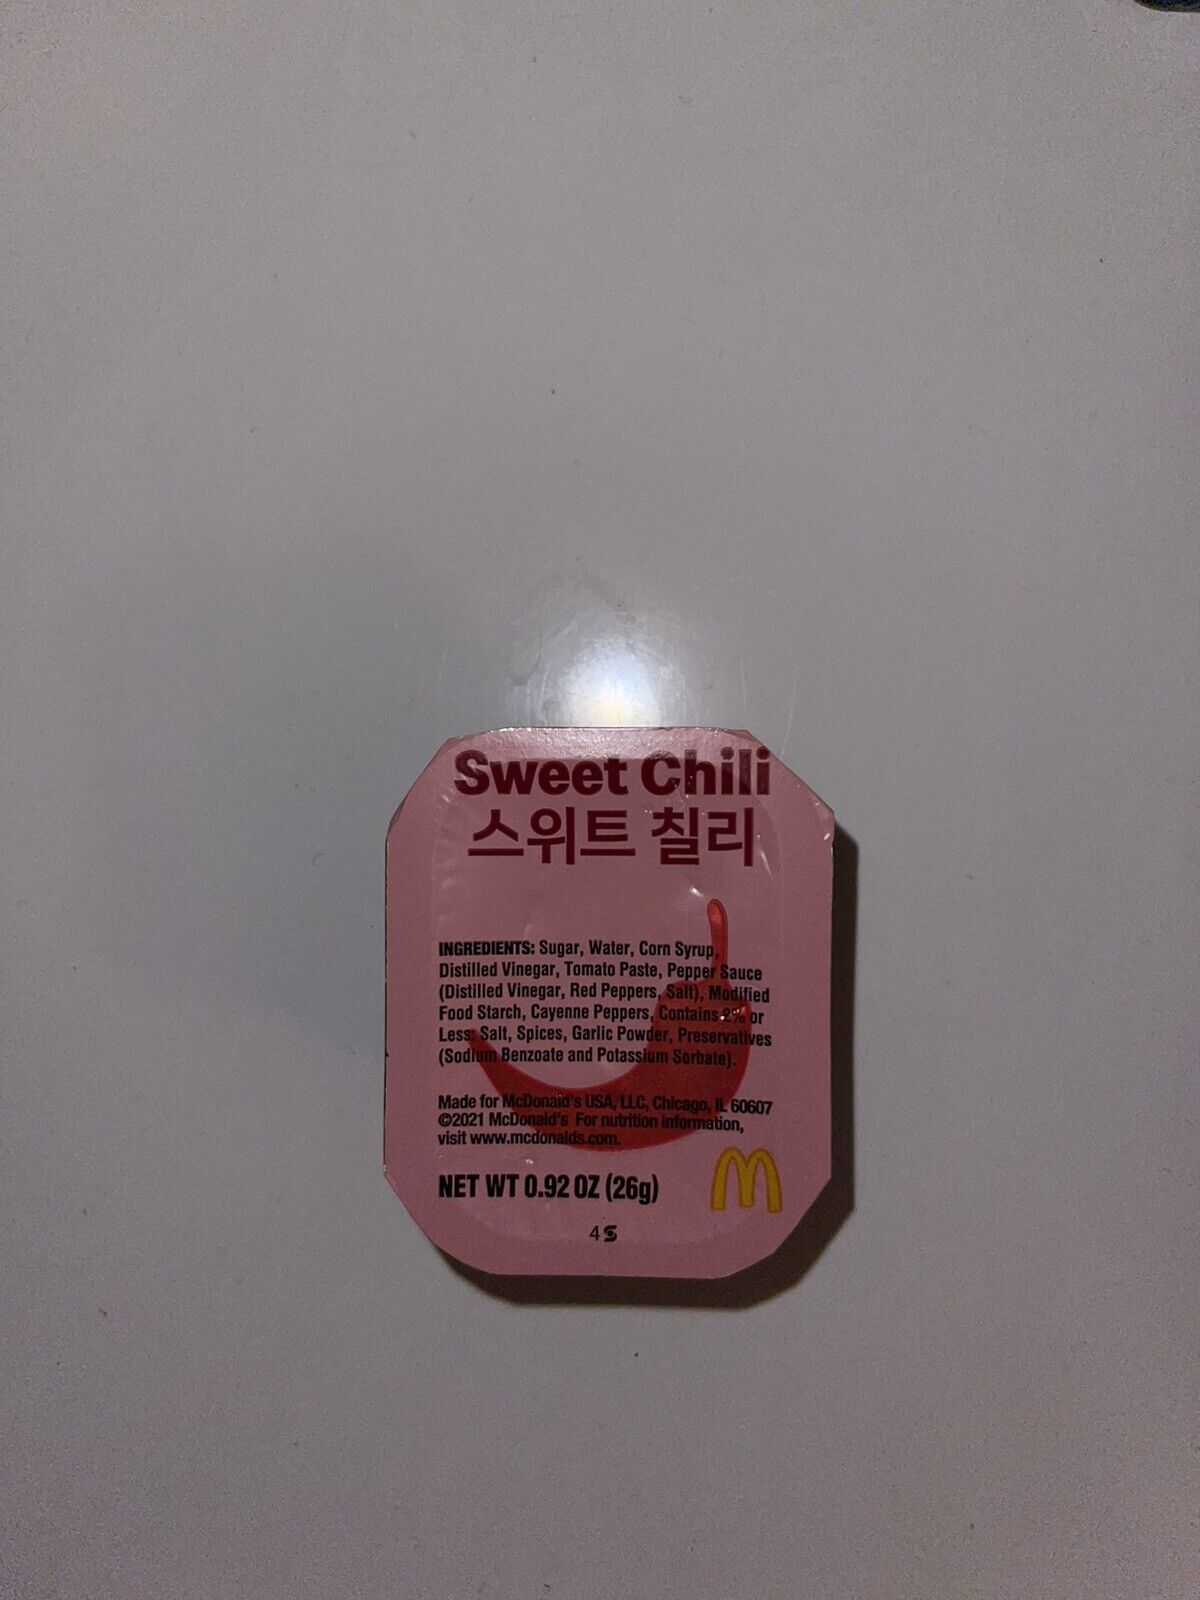 BTS McDonald’s Sweet Chili Sauce New